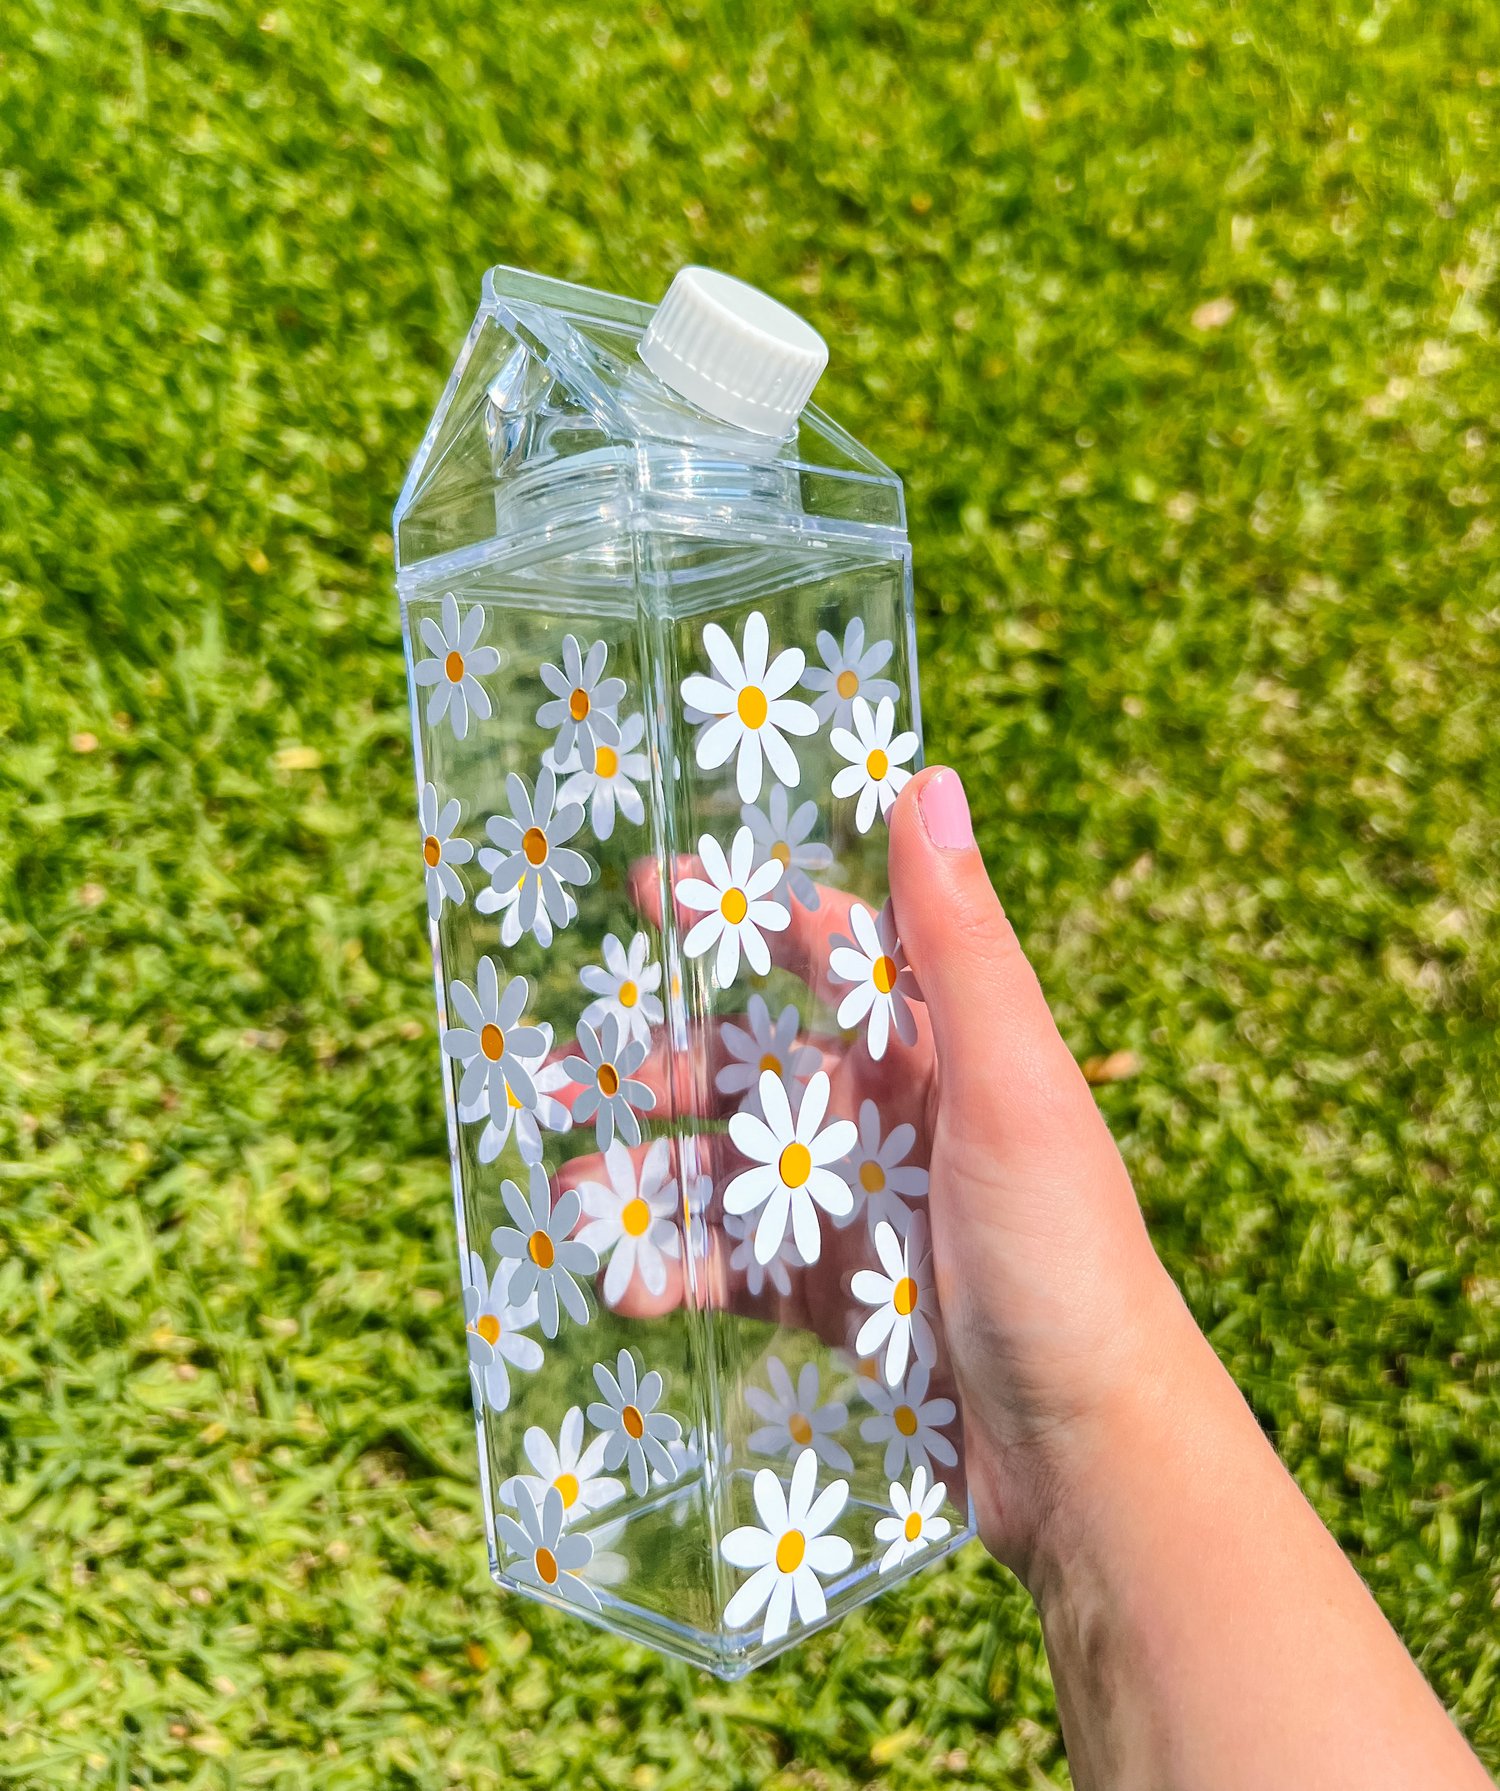 LV Milk Carton Acrylic Water Clear Bottle